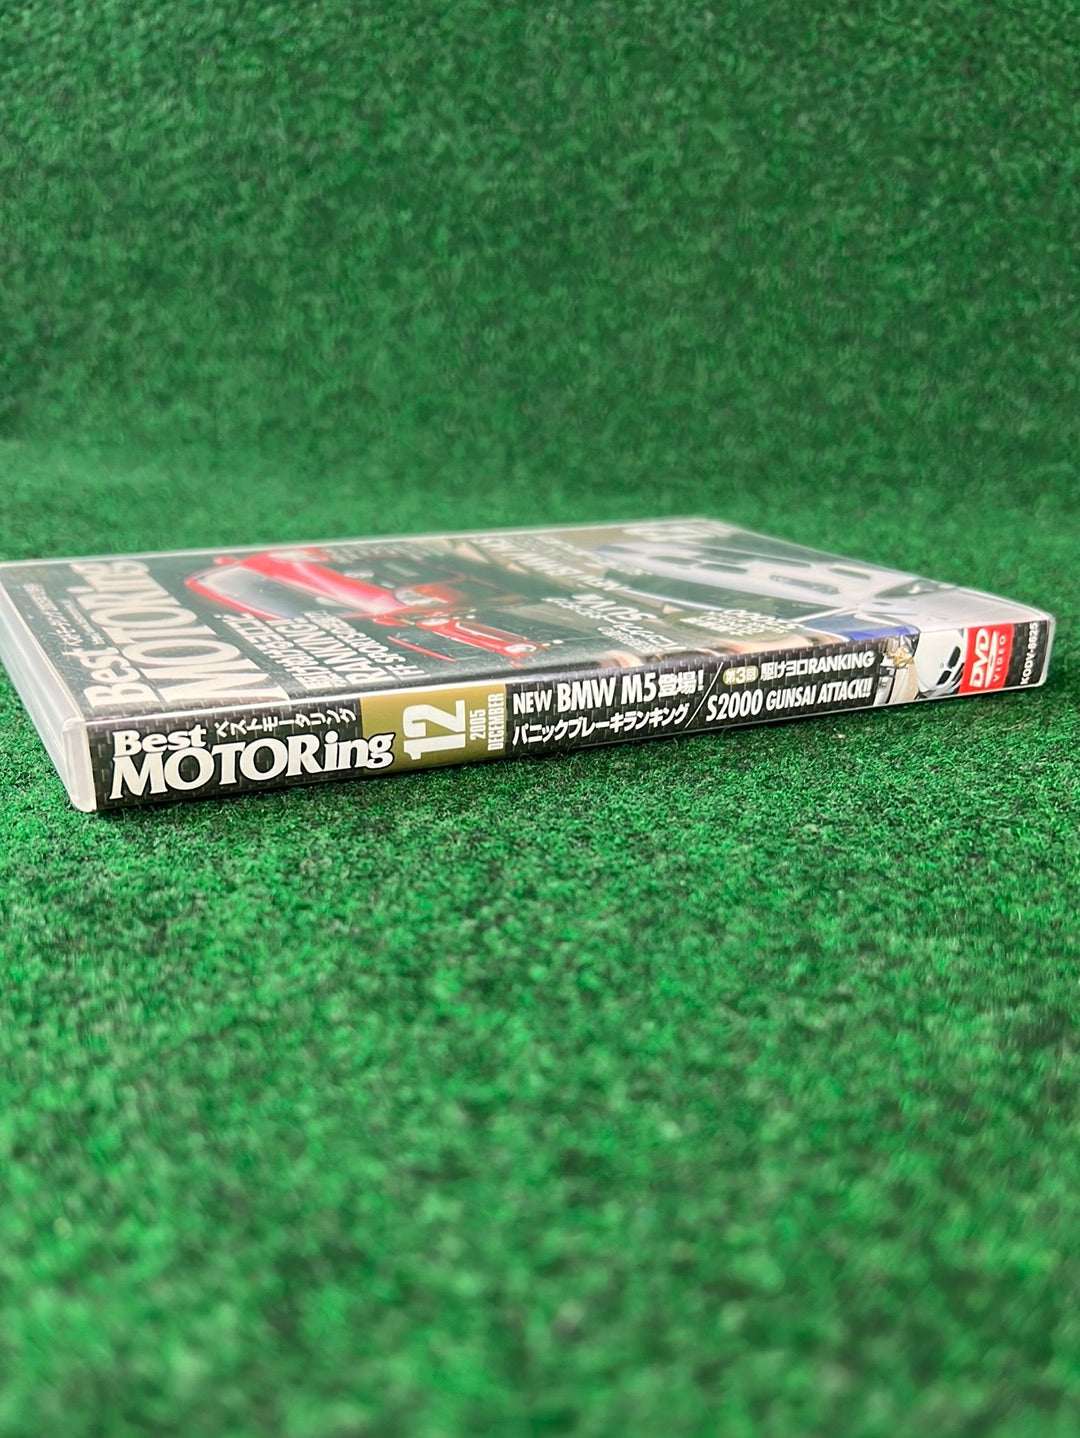 Best Motoring DVD - December 2005